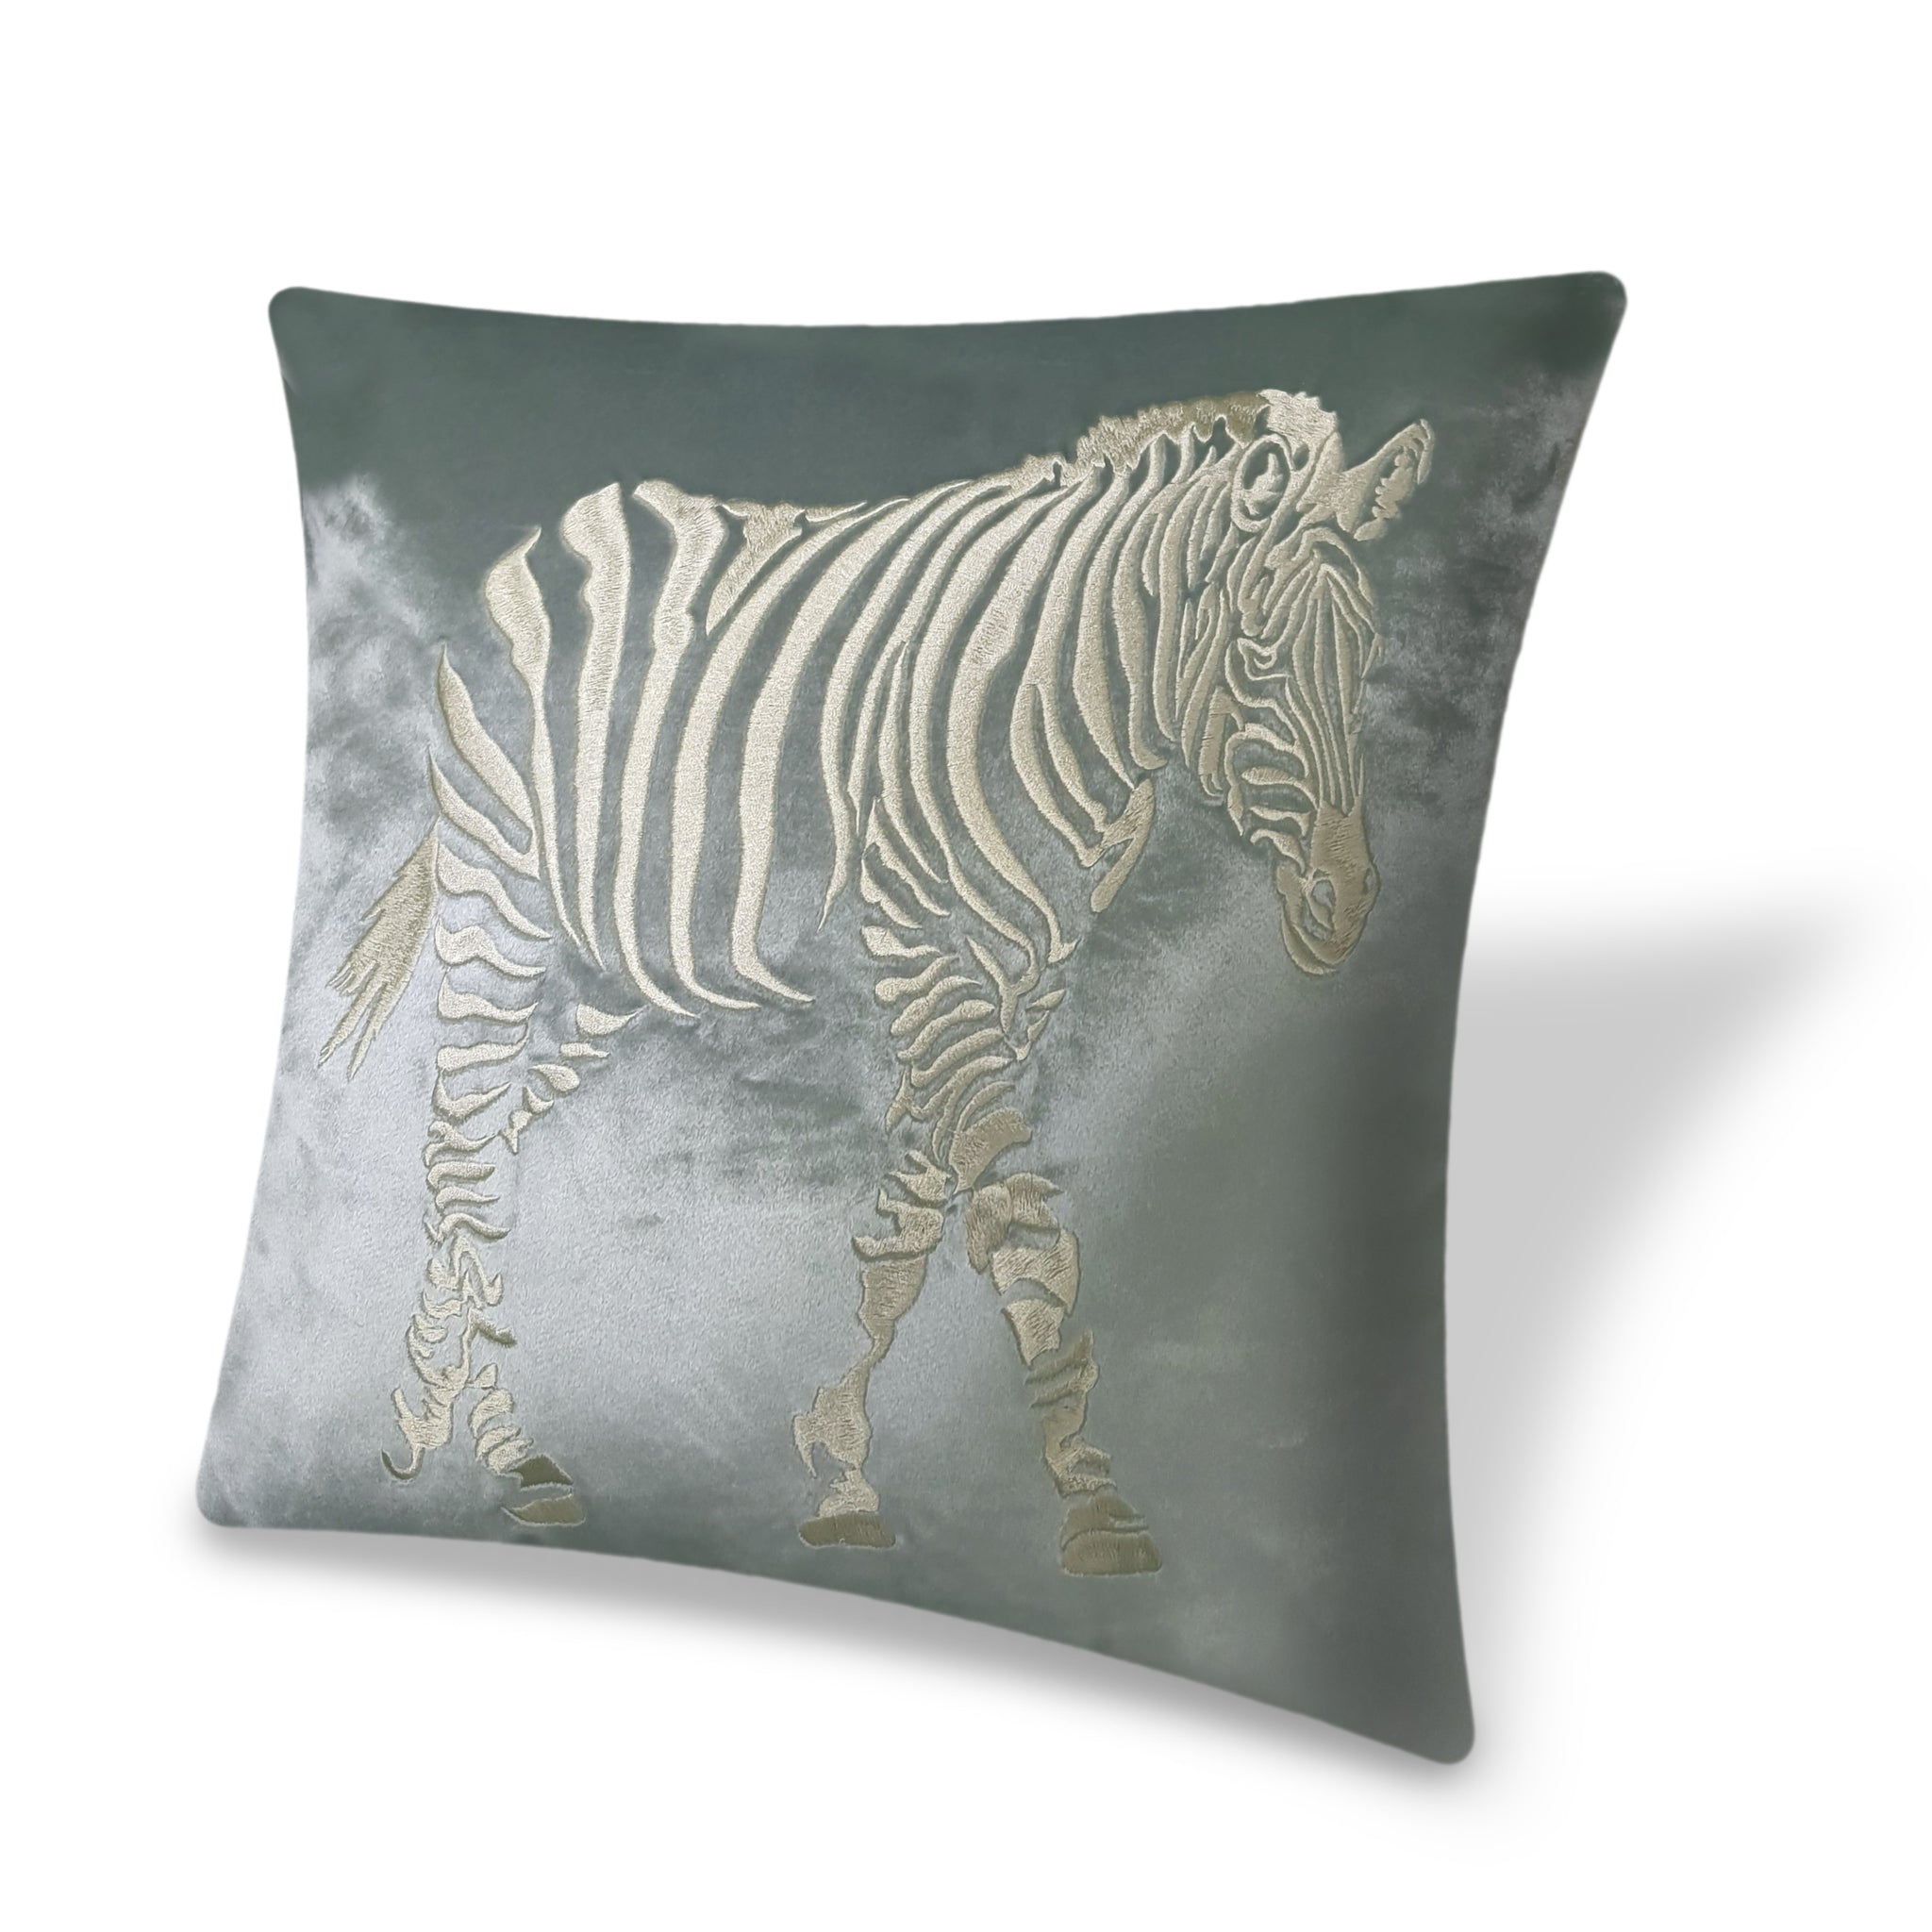  Velvet Cushion Cover Zebra Embroidery Decorative Pillowcase Modern Home Decor Throw Pillow for Sofa Chair Living Room 45x45 cm 